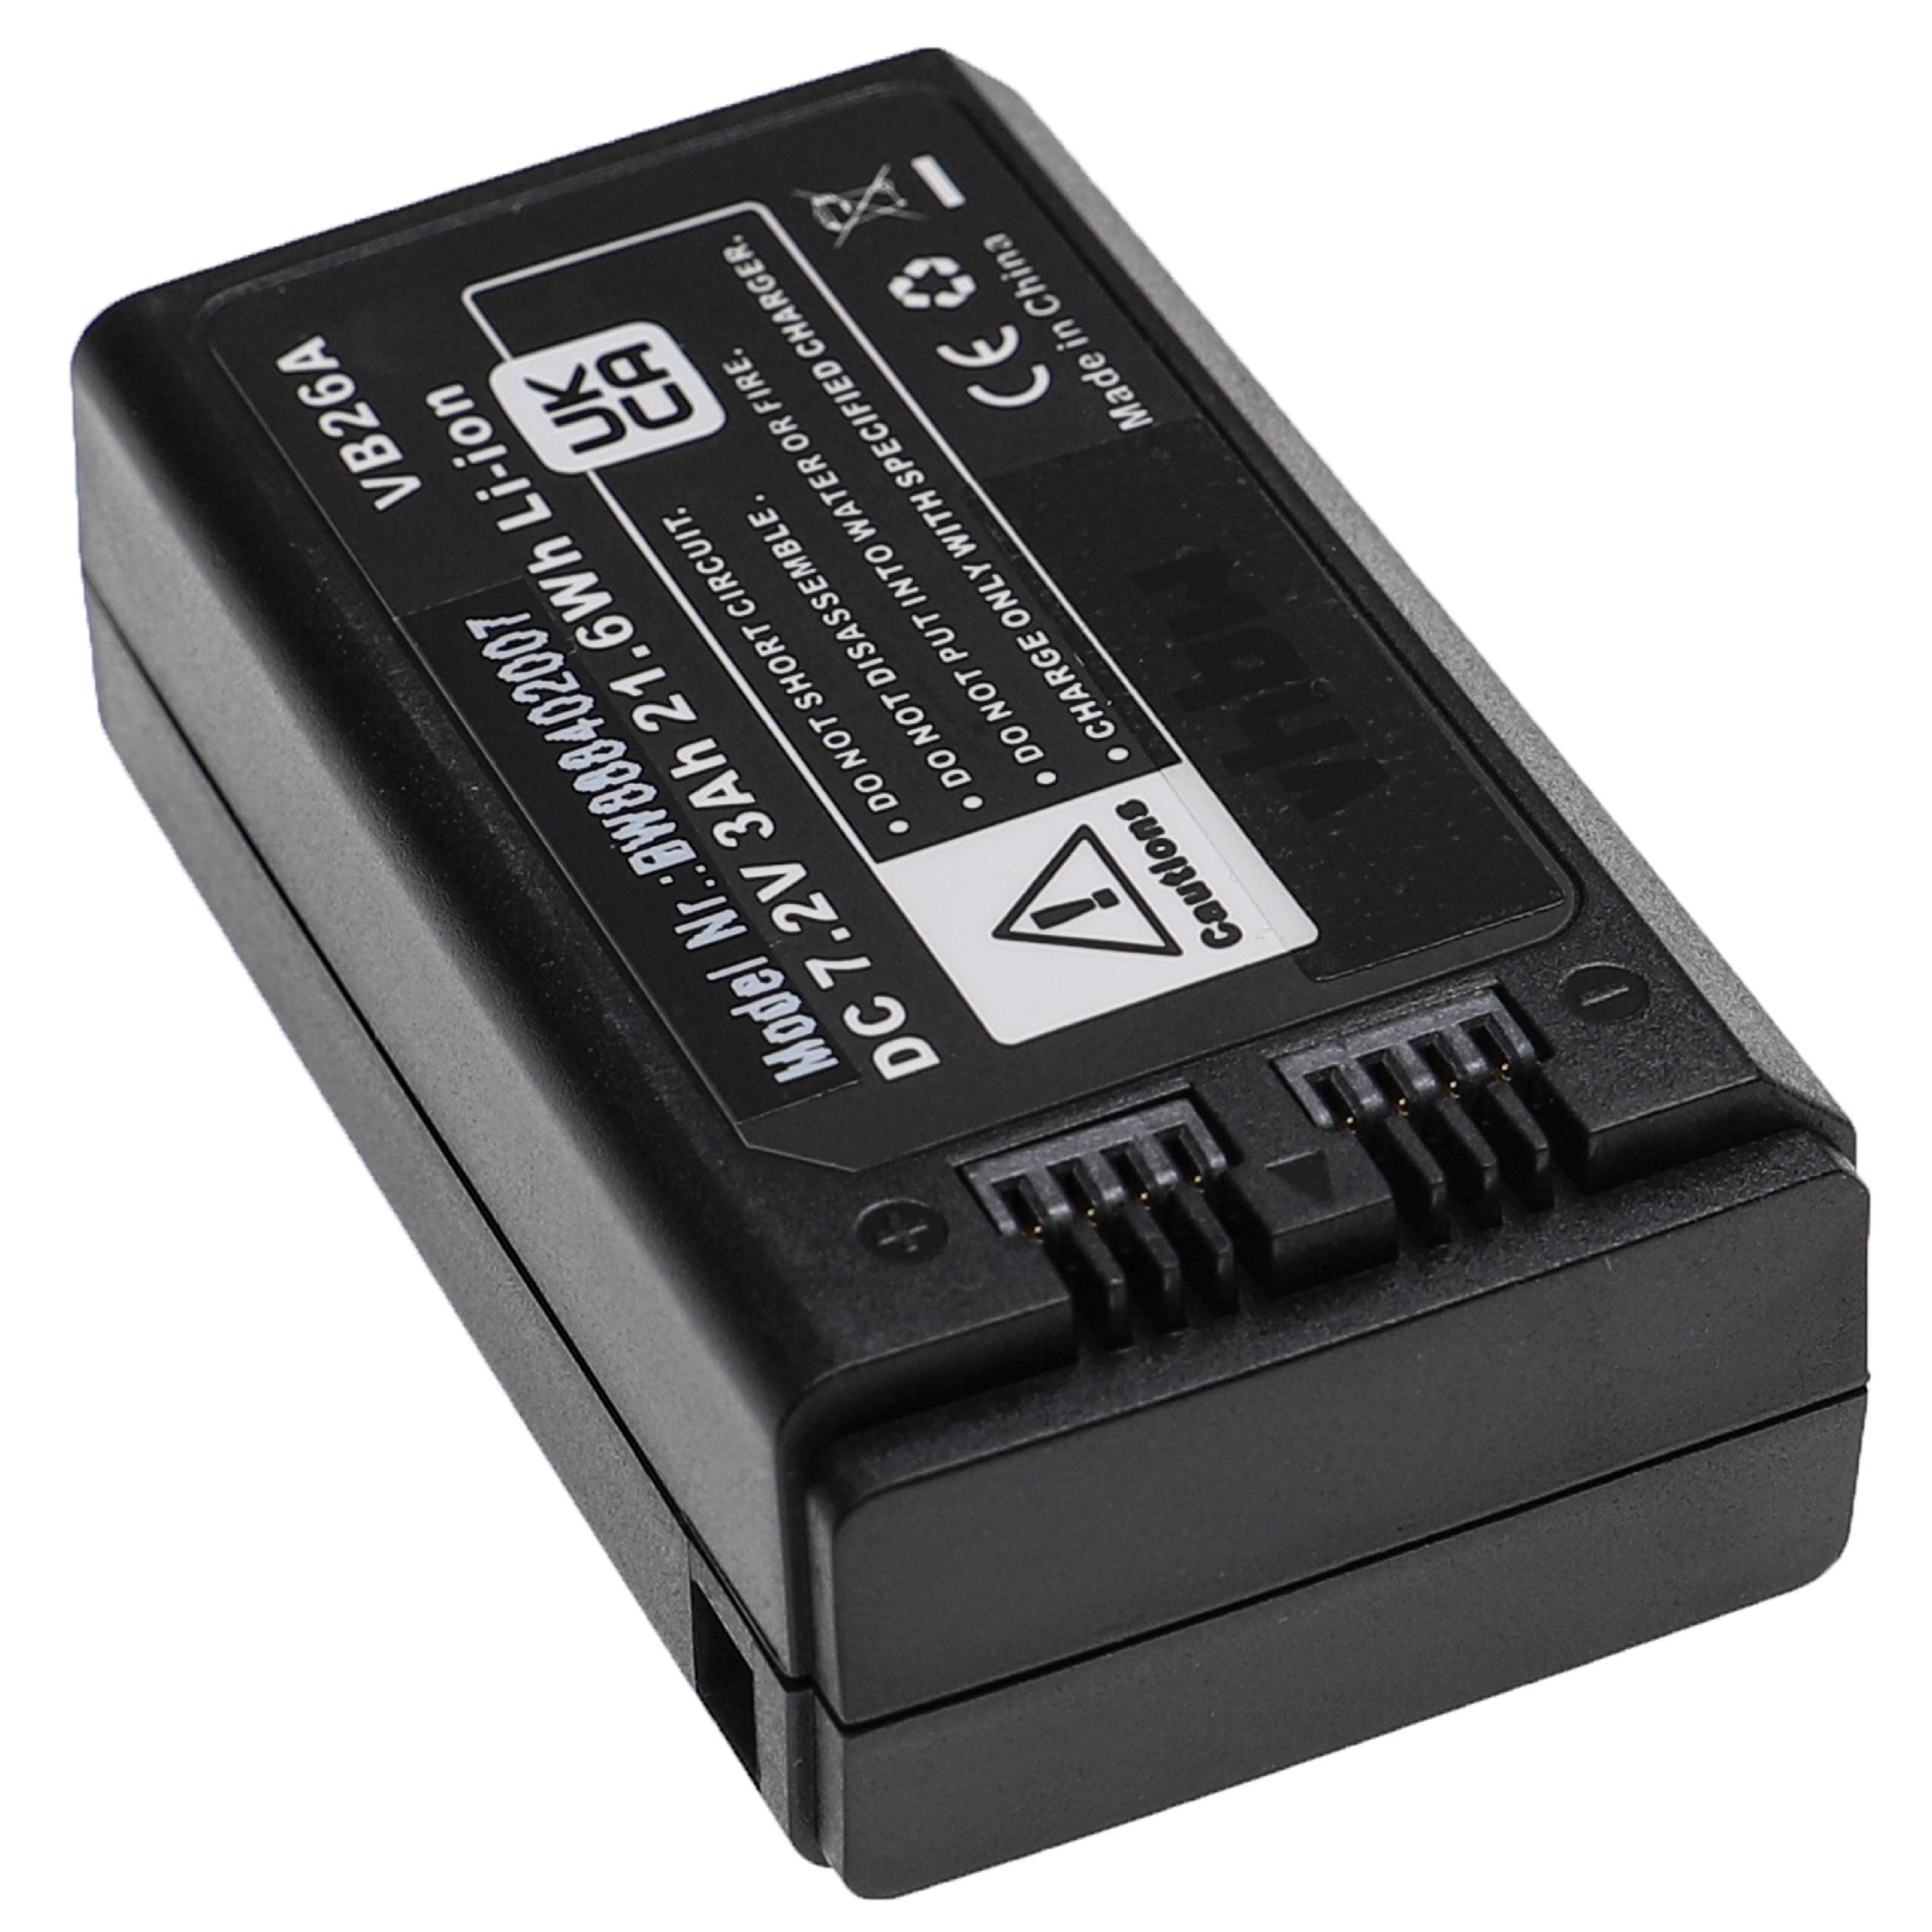 Batería reemplaza Godox VB26A, VB26 para dispositivos de flash Godox - 3000 mAh 7,2 V Li-Ion